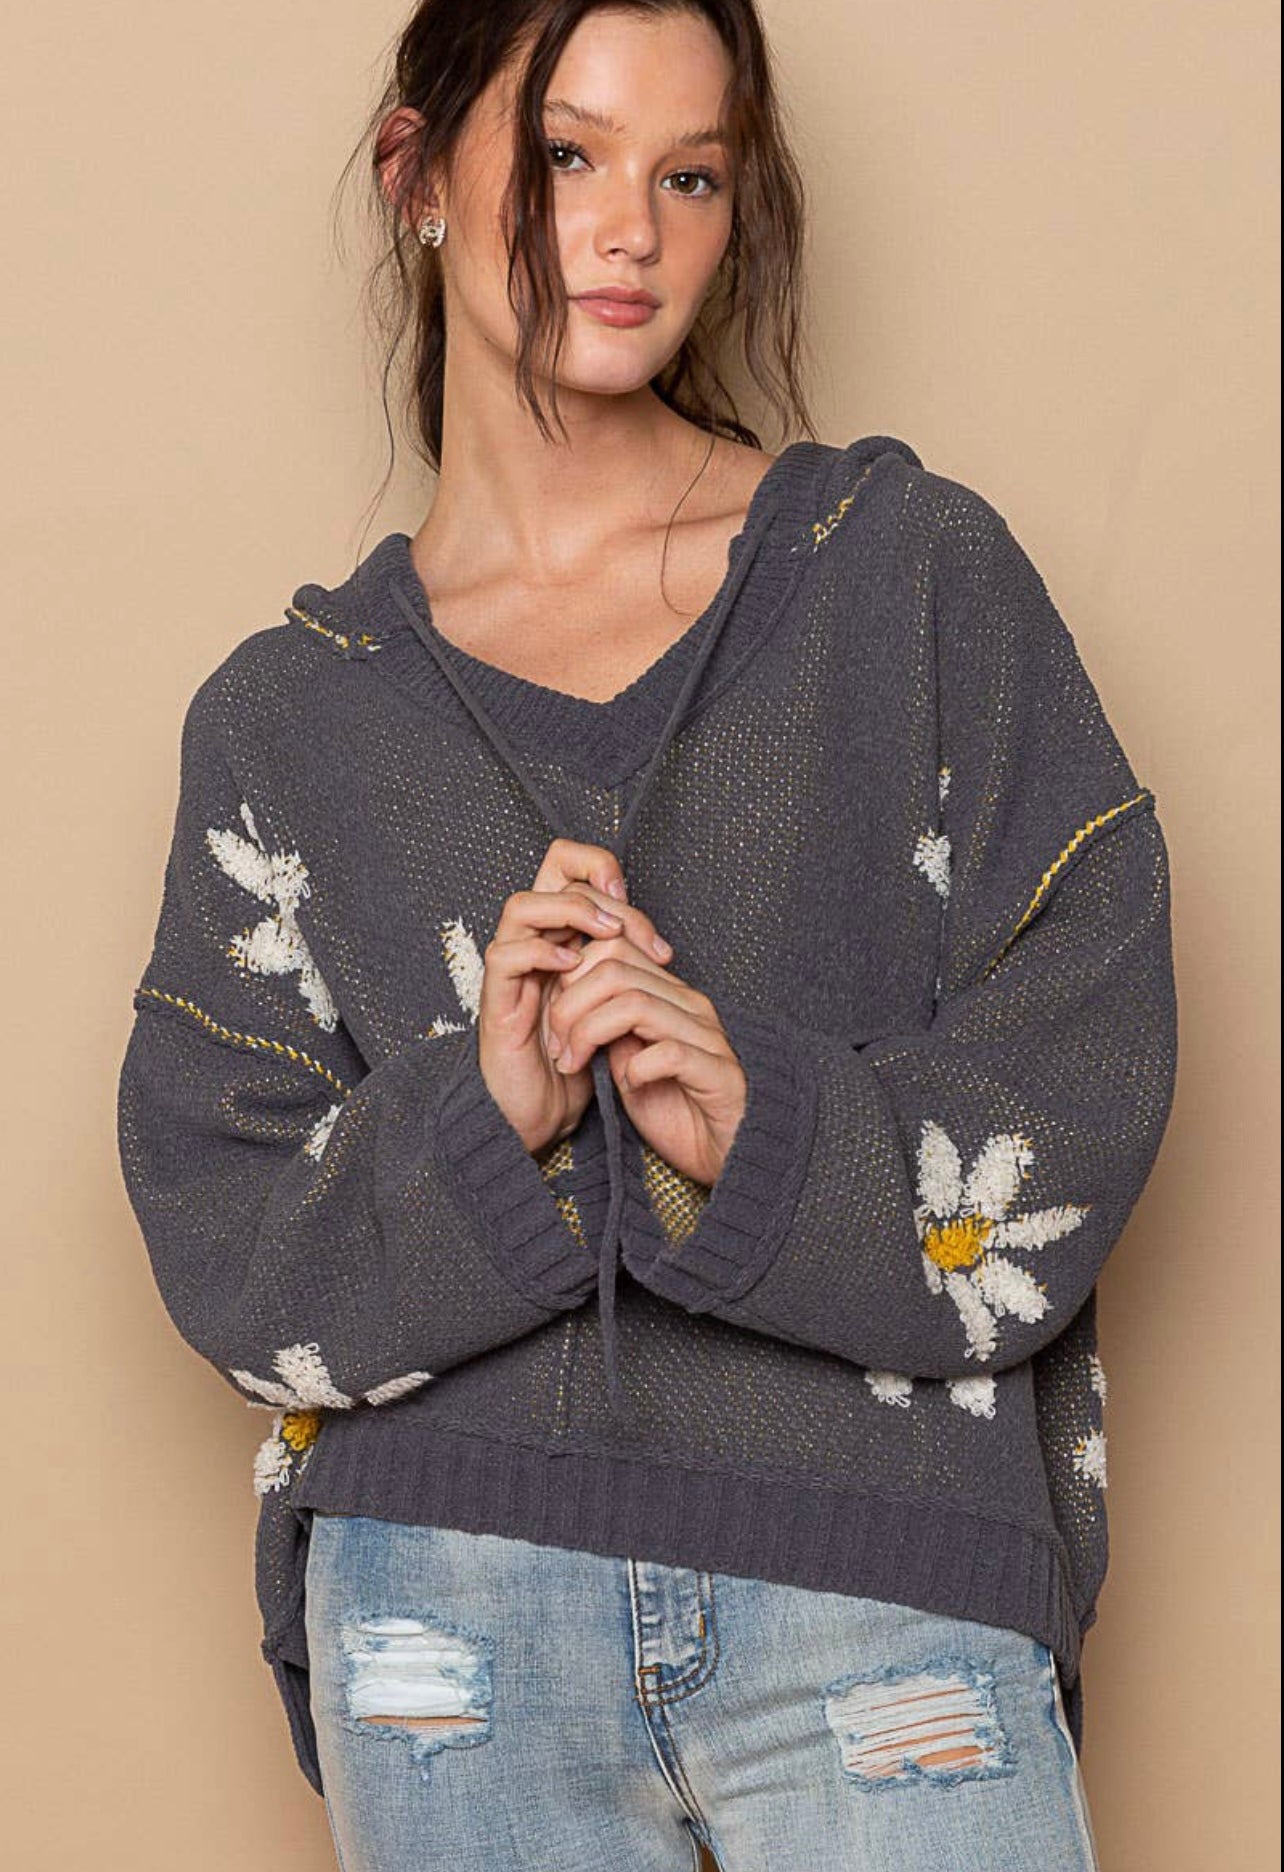 Charcoal pol flower sweatshirt